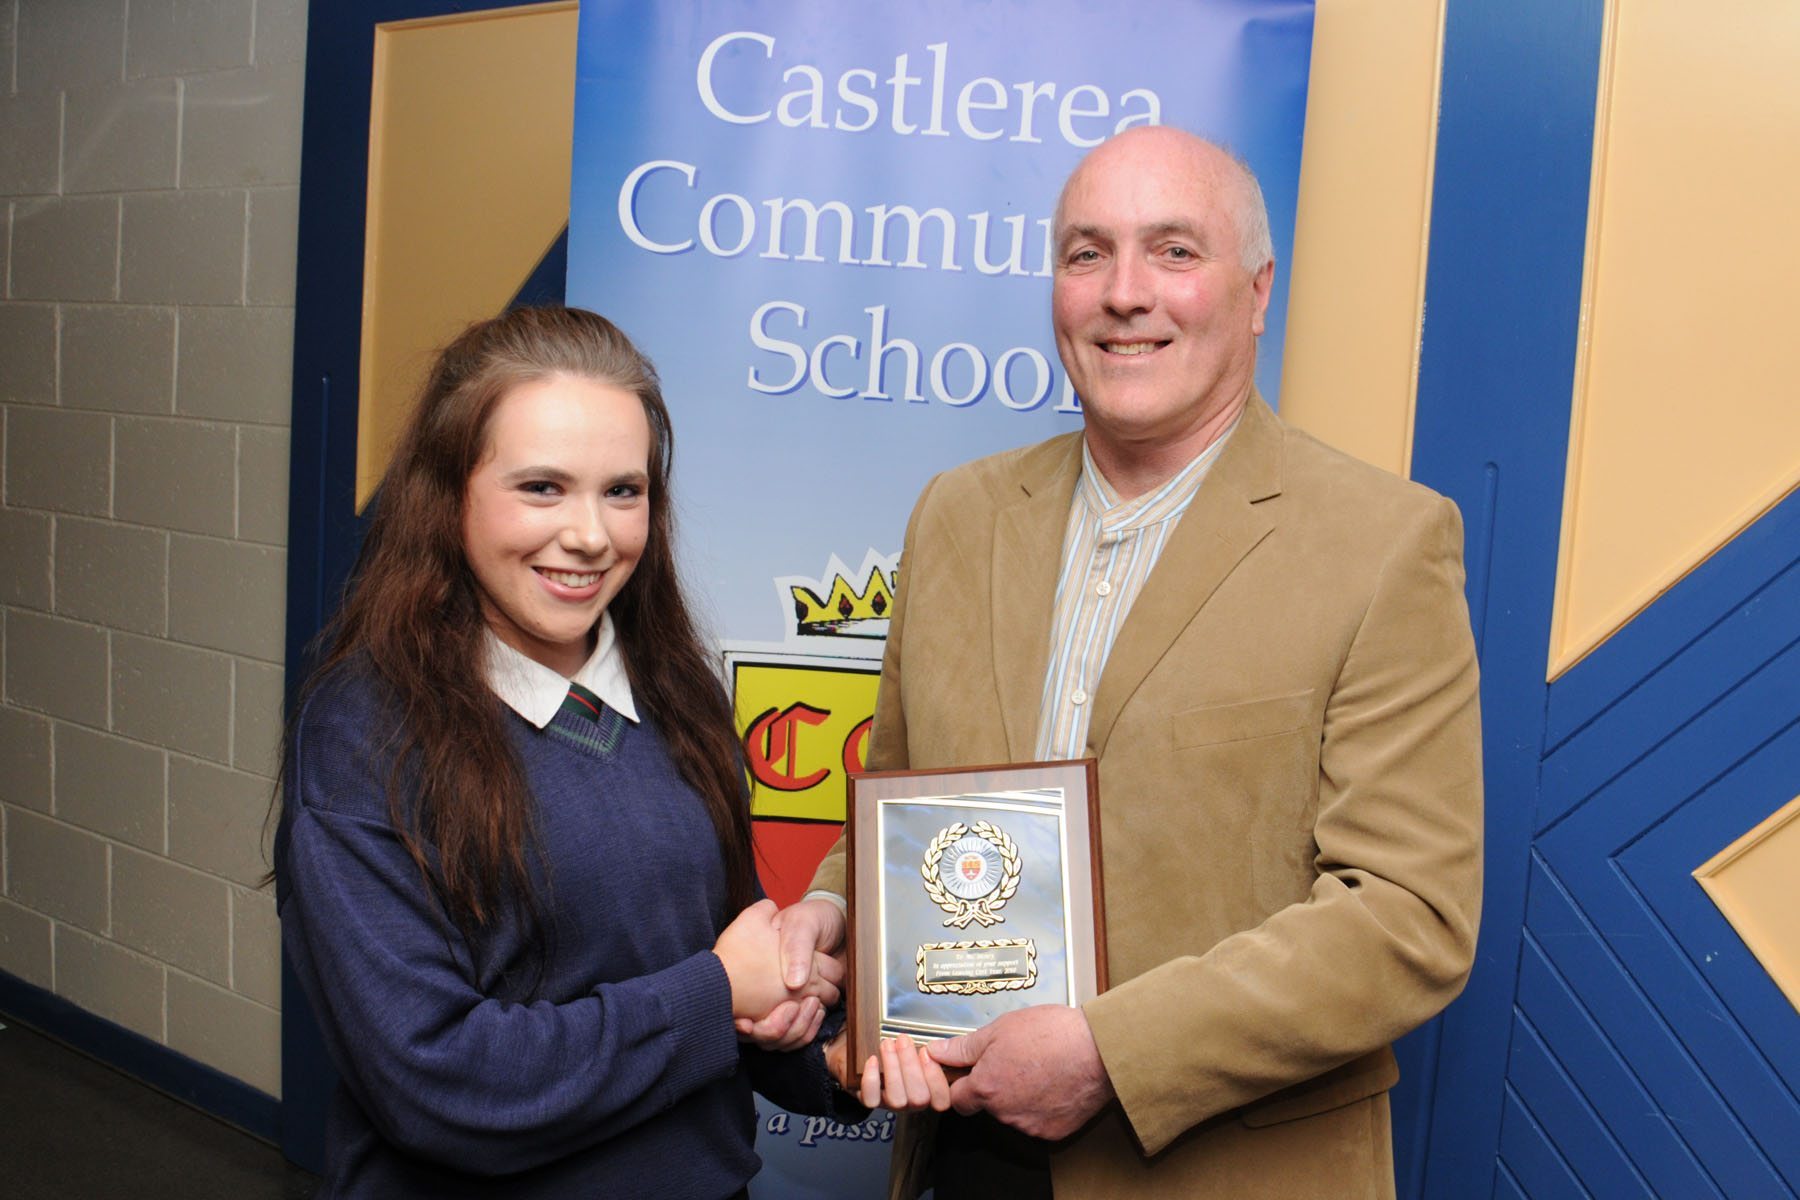 Castlerea Community School